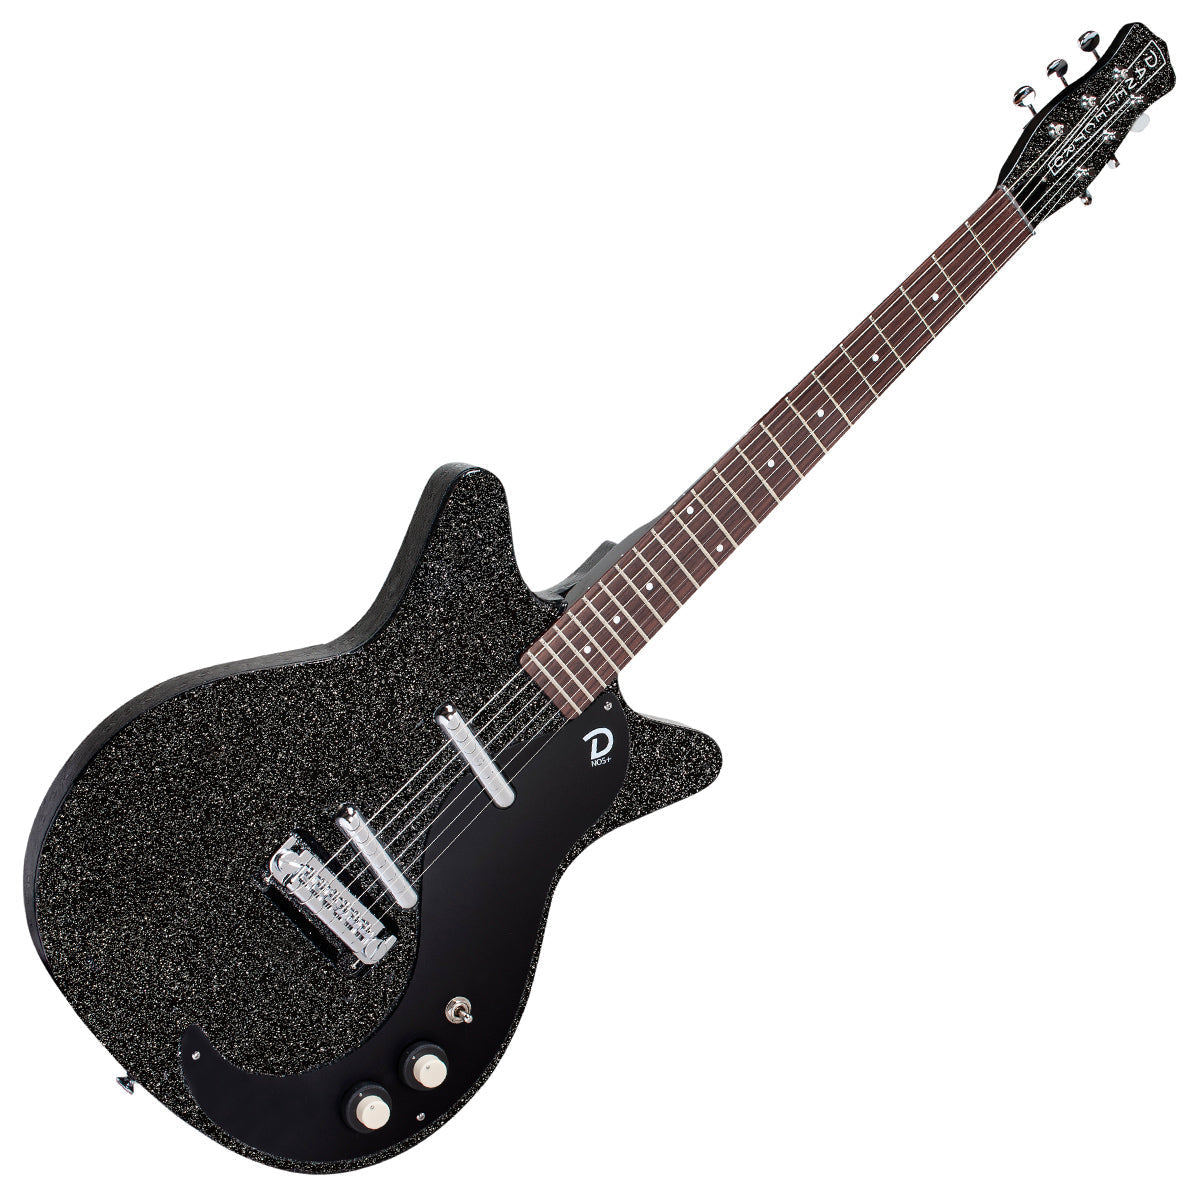 Danelectro Blackout '59M NOS+ Electric Guitar ~ Black Metalflake, Electric Guitar for sale at Richards Guitars.